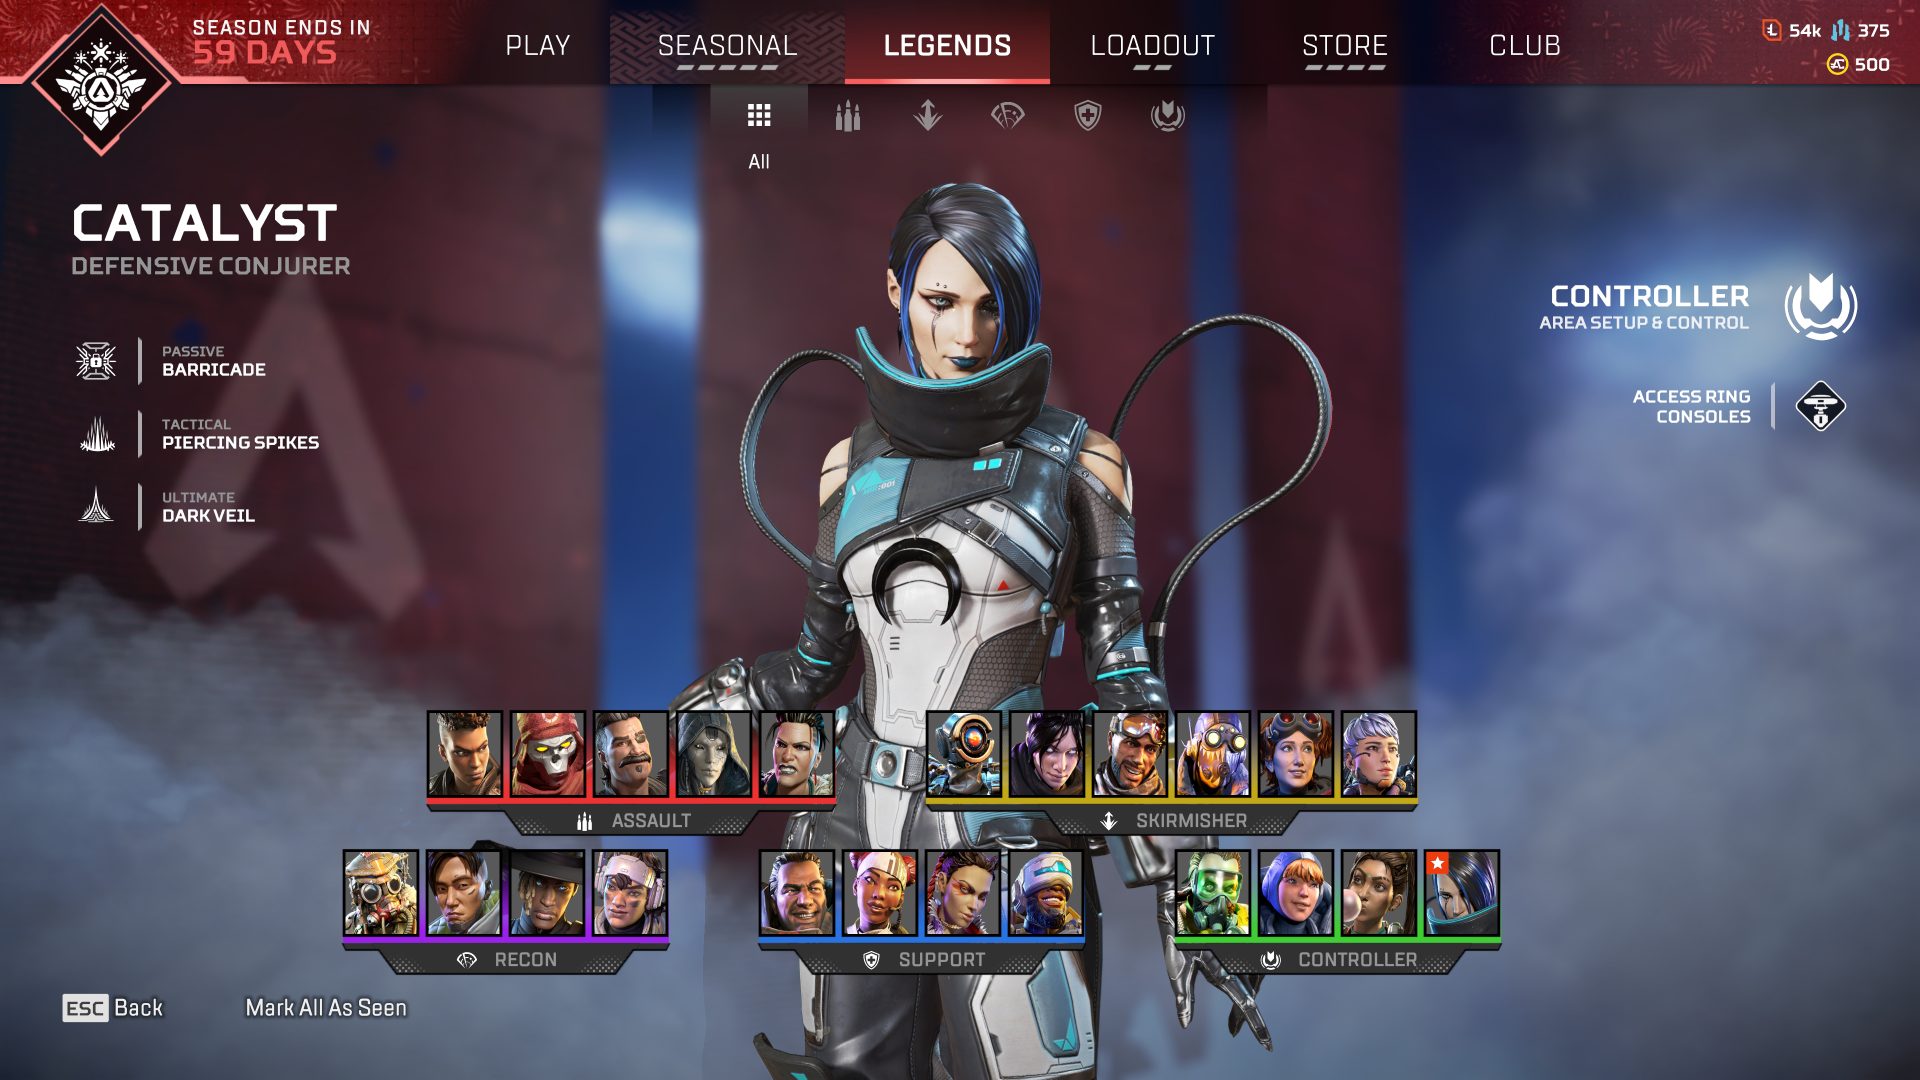 Apex Legends apresenta novo sistema de classes